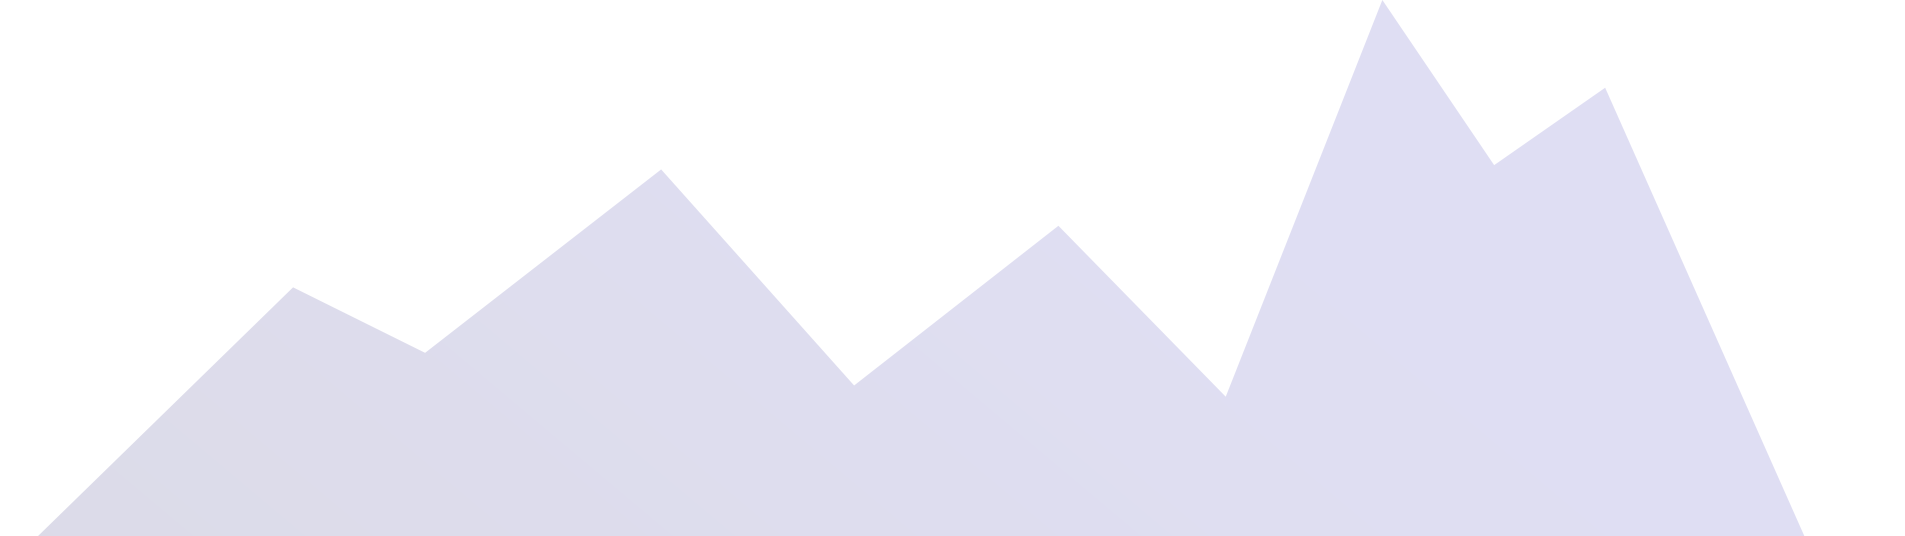 banner polygon